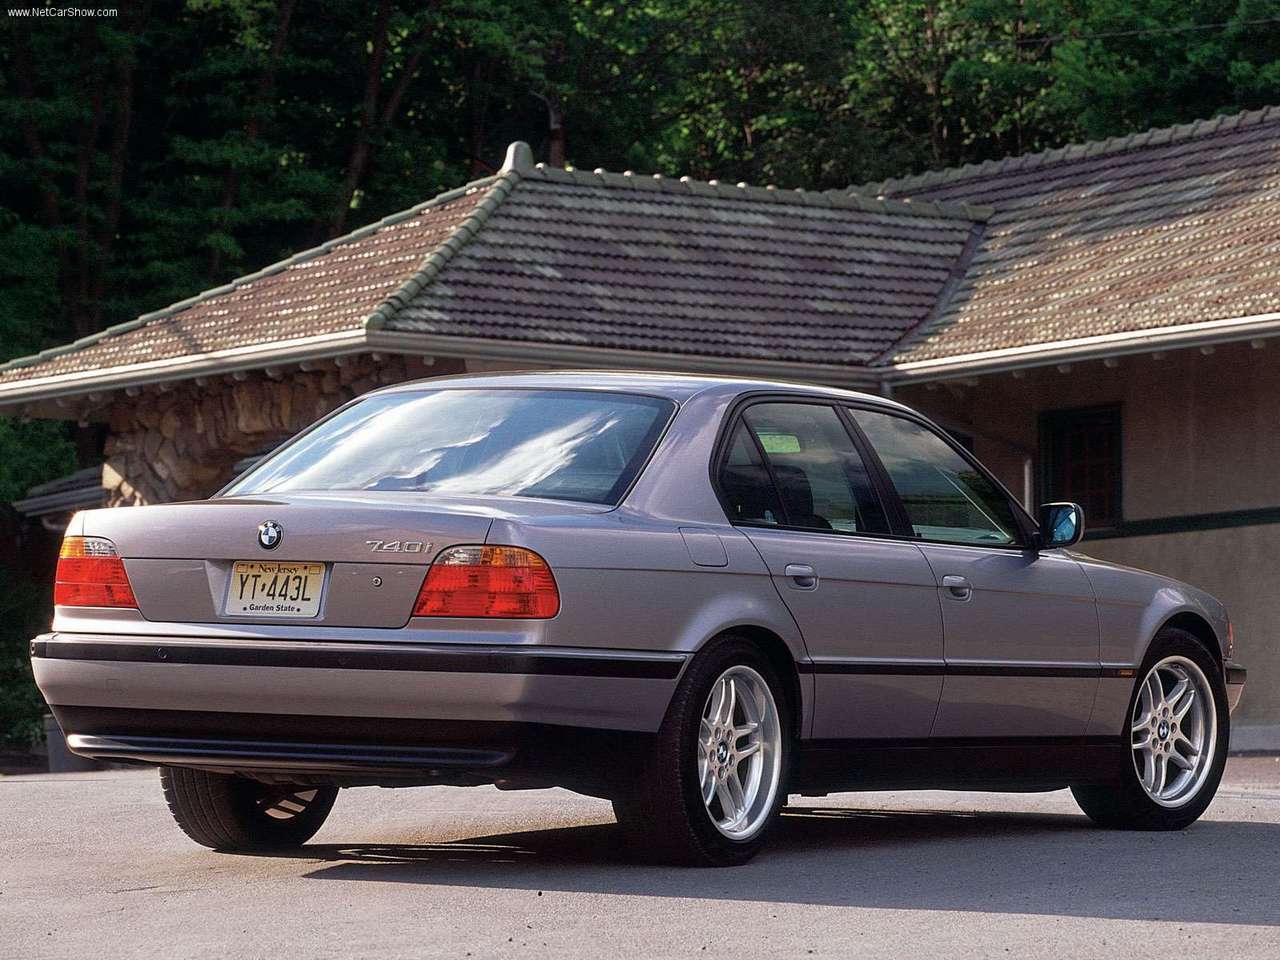 BMW, BMW E38, E38, E38 7 Series, 7 Series, Seven series, classic car, retro car, executive saloon, motoring, automotive, carandclassic, carandclassic.co.uk